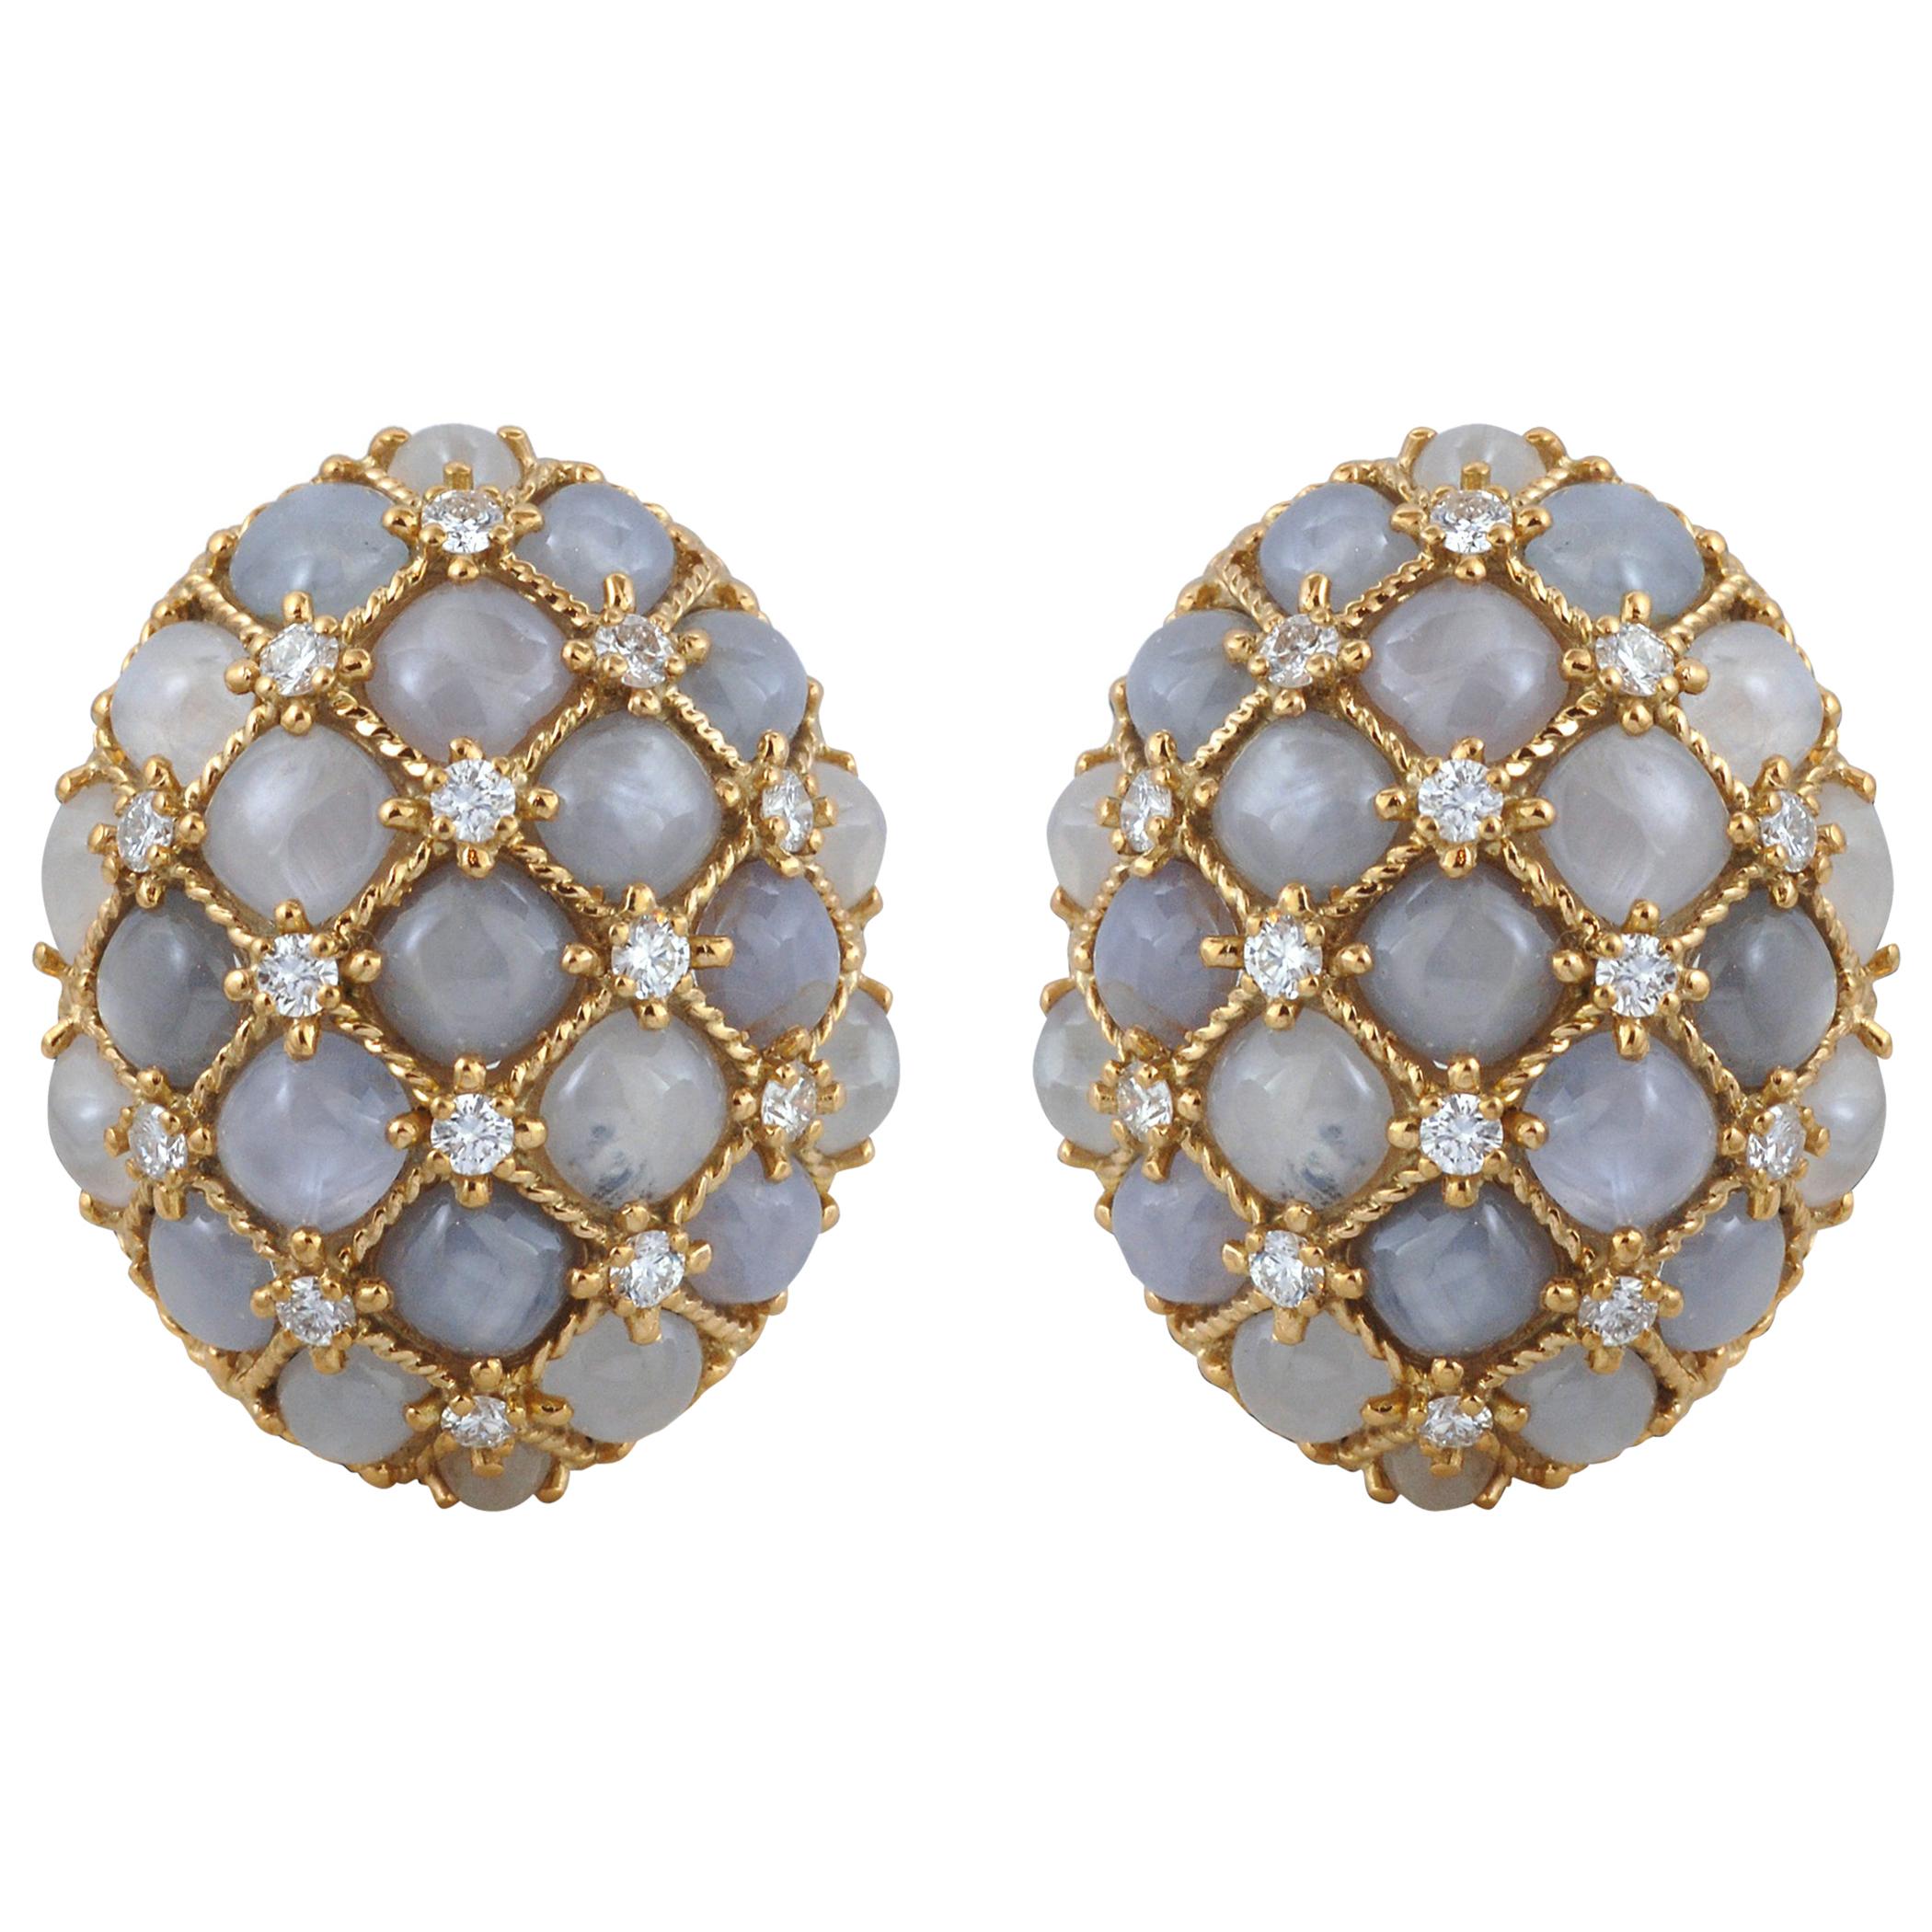 Update more than 83 star sapphire earrings latest - esthdonghoadian